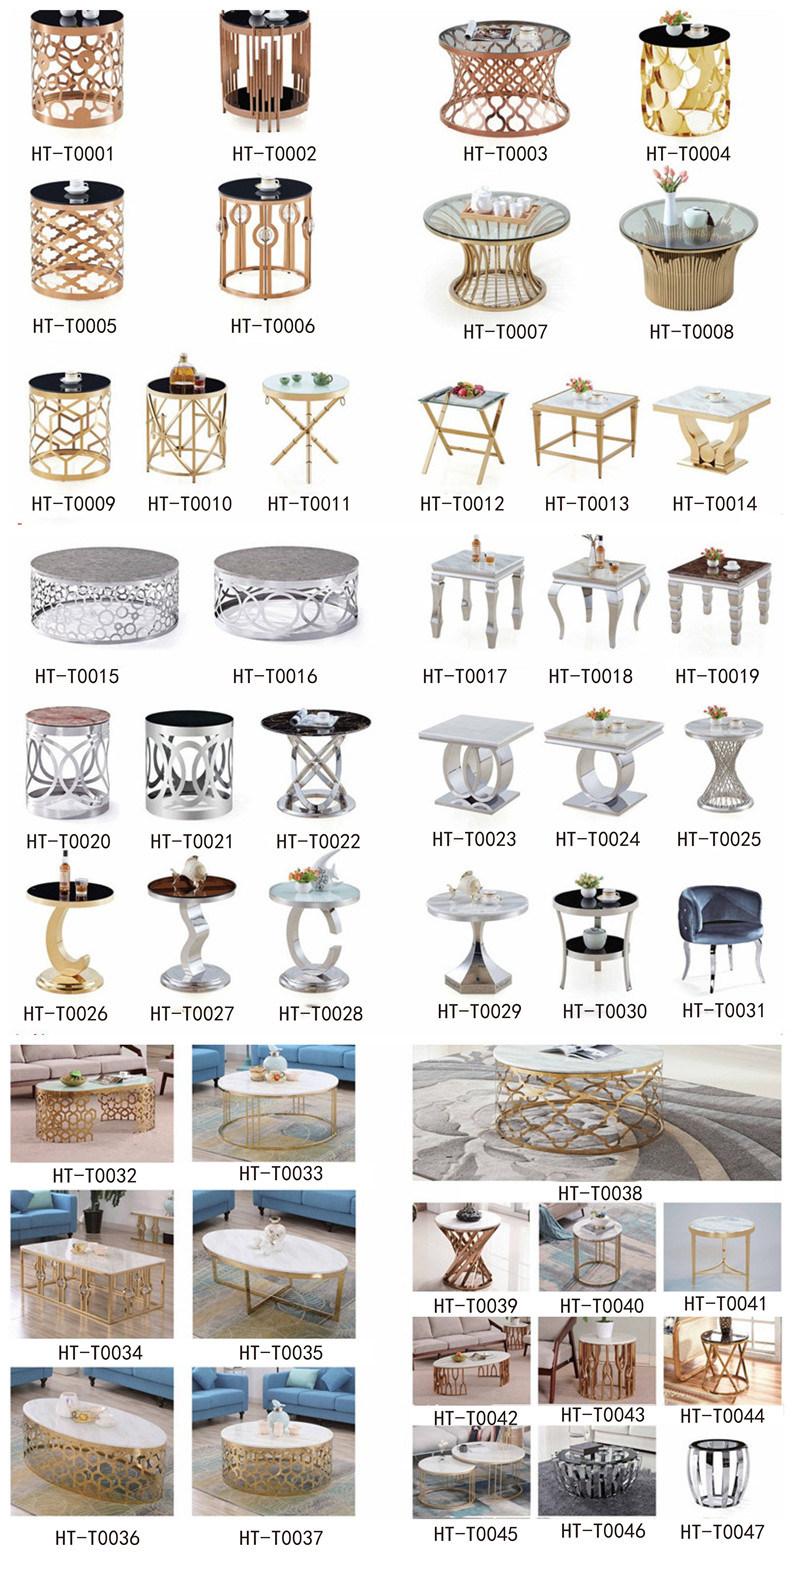 Modern Coffee Table / Metal Living Room Table / Silver Coffee Table / Console Table / Side Table / Steel Coffee Table / Small Table